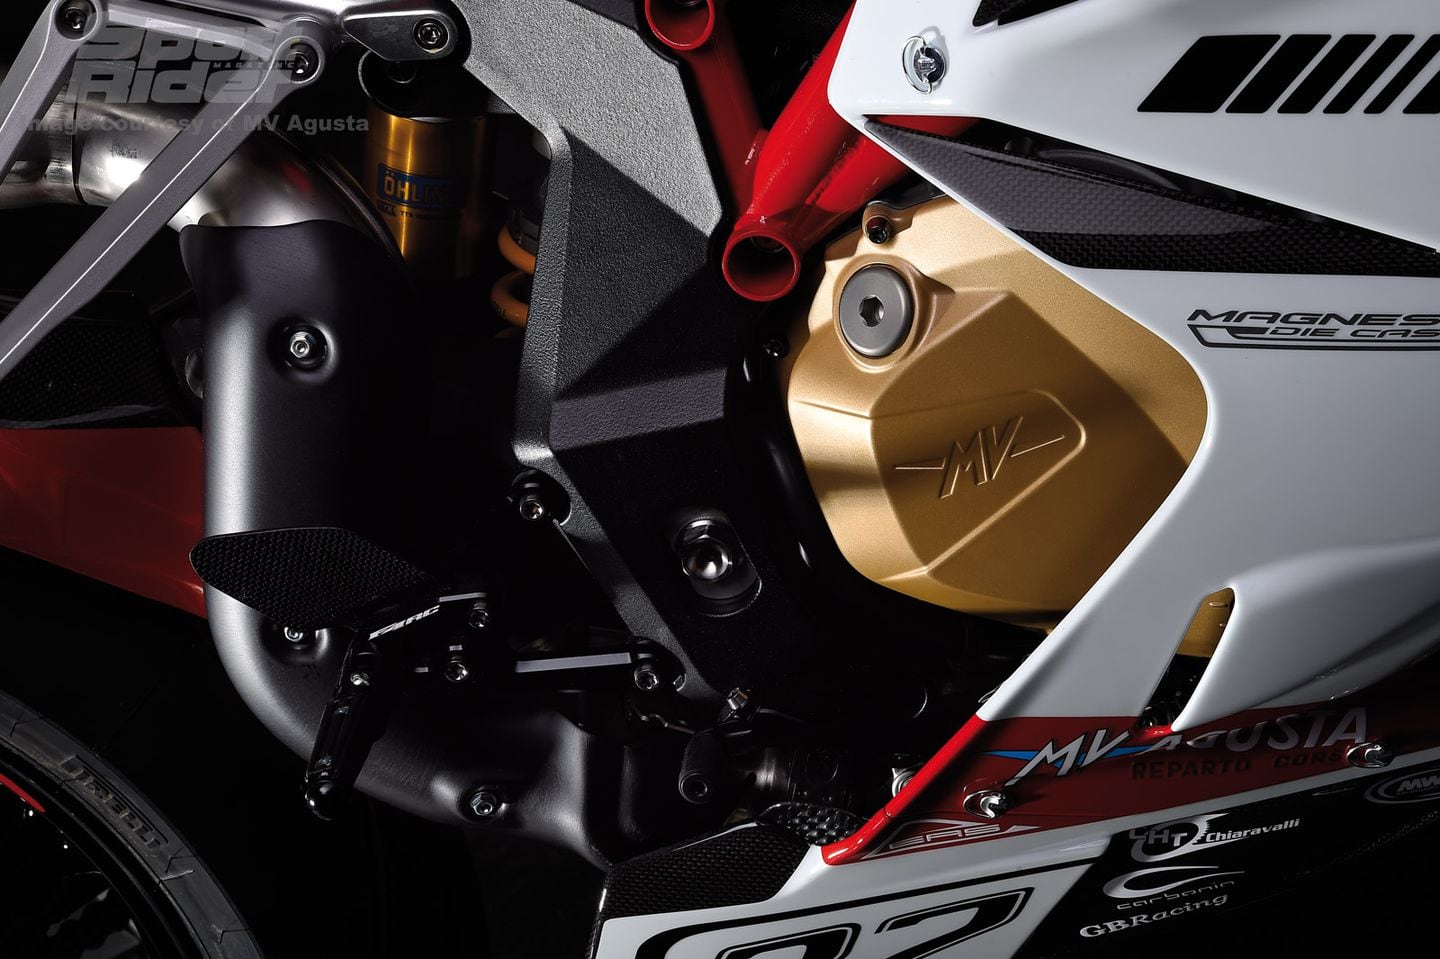 Sweet 2015 MV Agusta F4 RC Has Race Kit Installed, Just 14 Miles On Clock